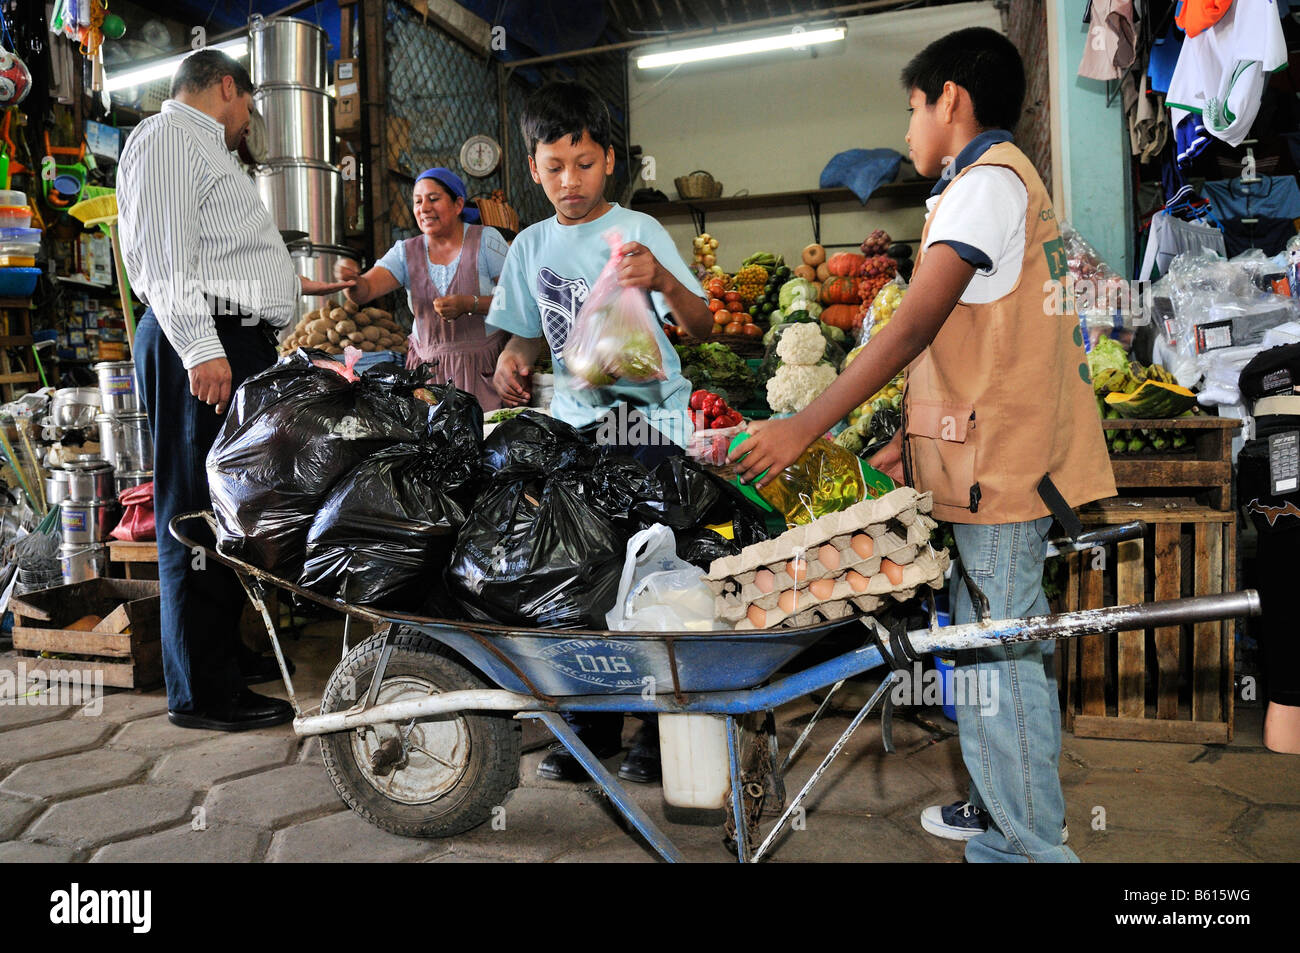 Child labour, boys transporting customers' purchases using a wheel barrow at the local market, Santa Cruz, Bolivia Stock Photo